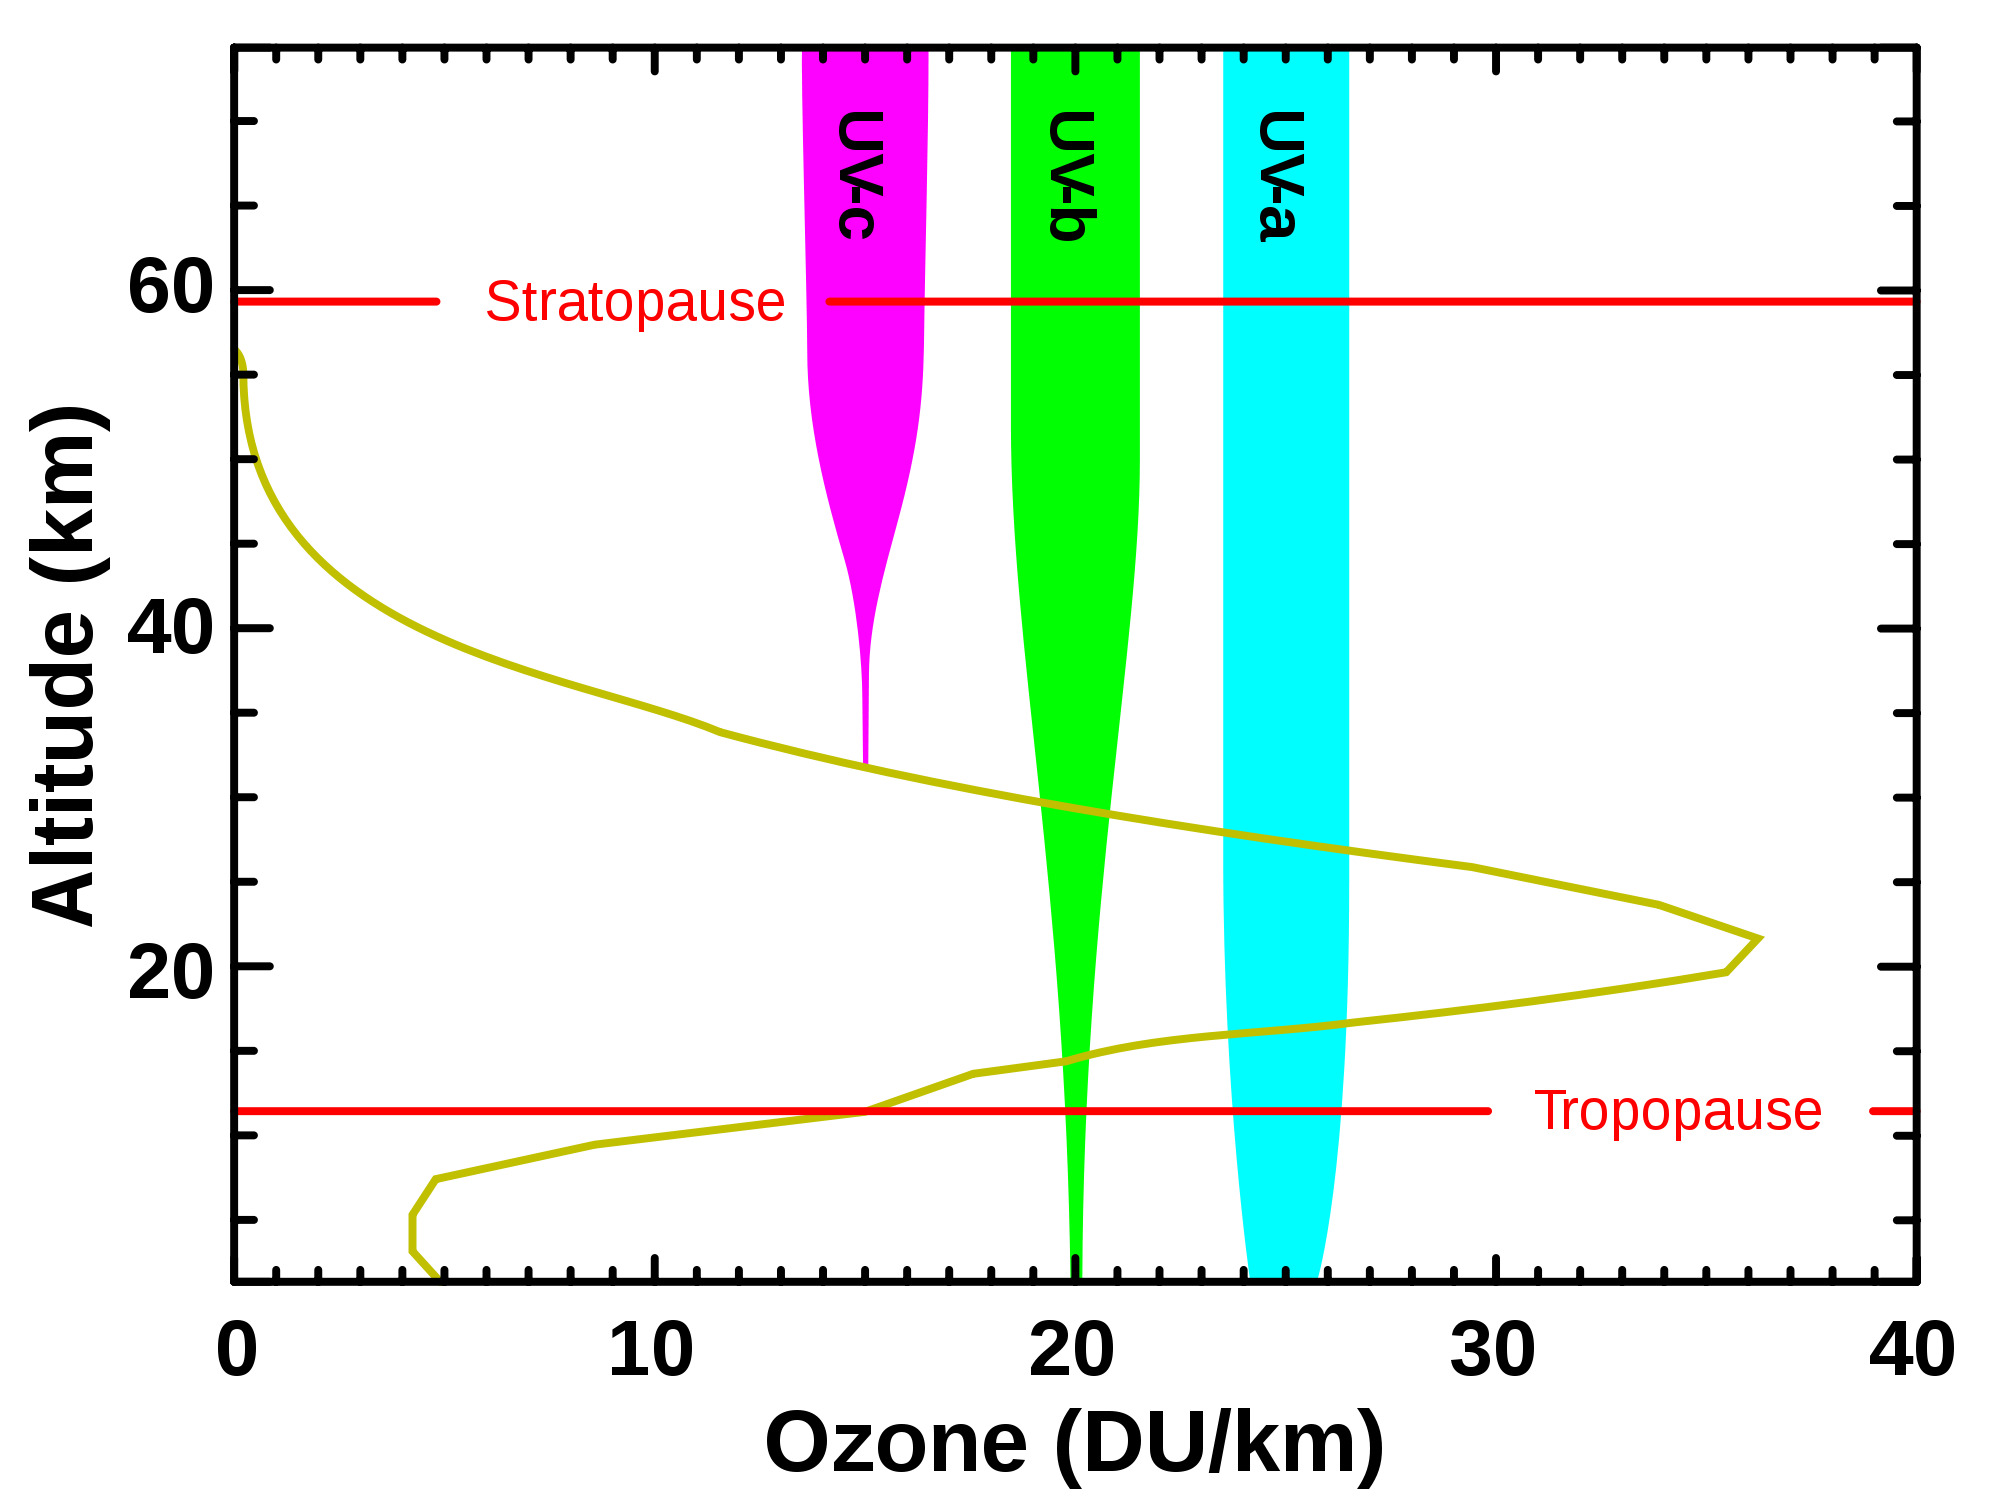 https://upload.wikimedia.org/wikipedia/commons/thumb/c/cb/Ozone_altitude_UV_graph.svg/2000px-Ozone_altitude_UV_graph.svg.png